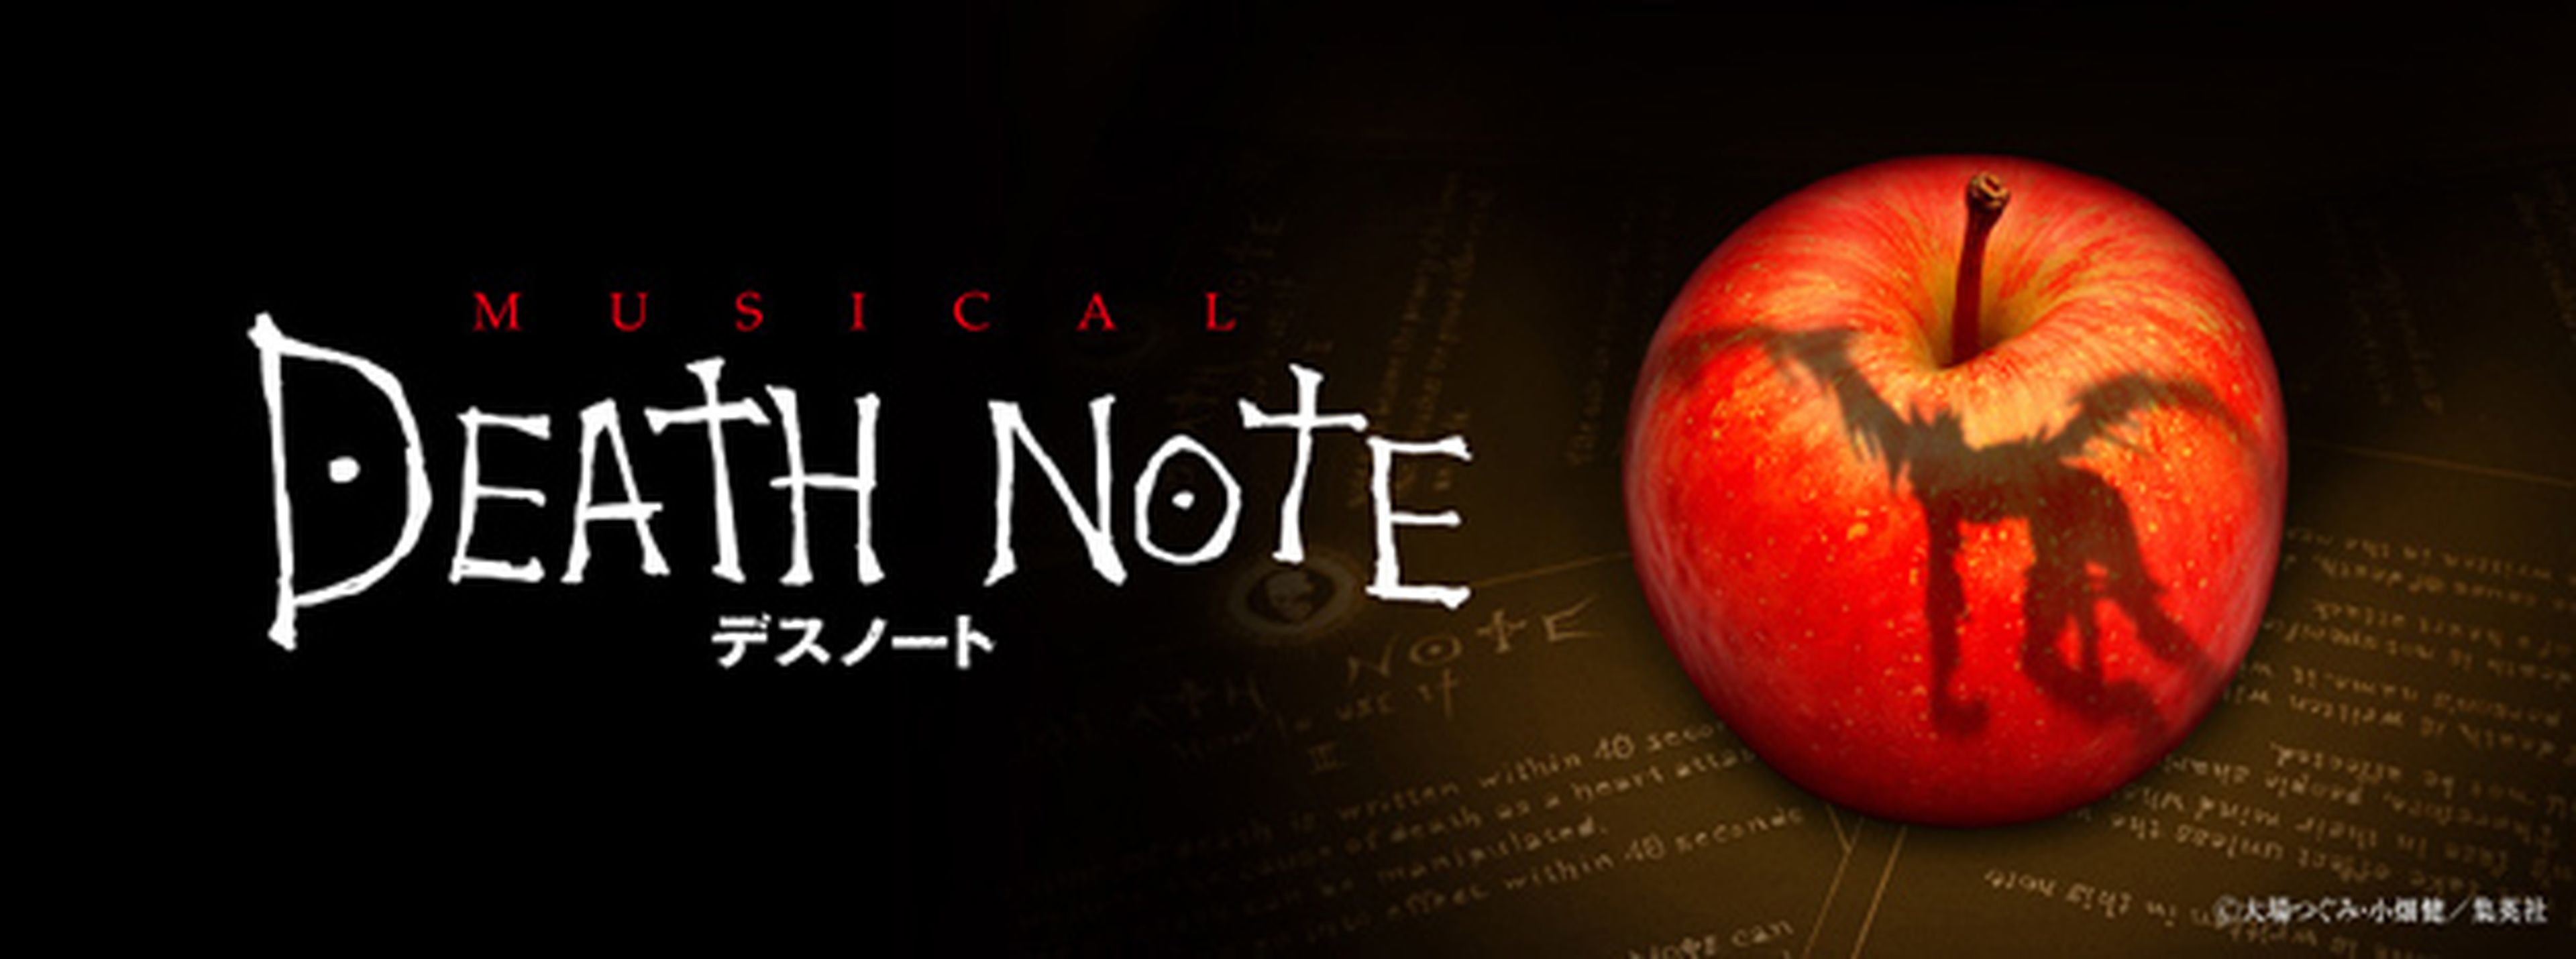 Death Note será adaptado a musical